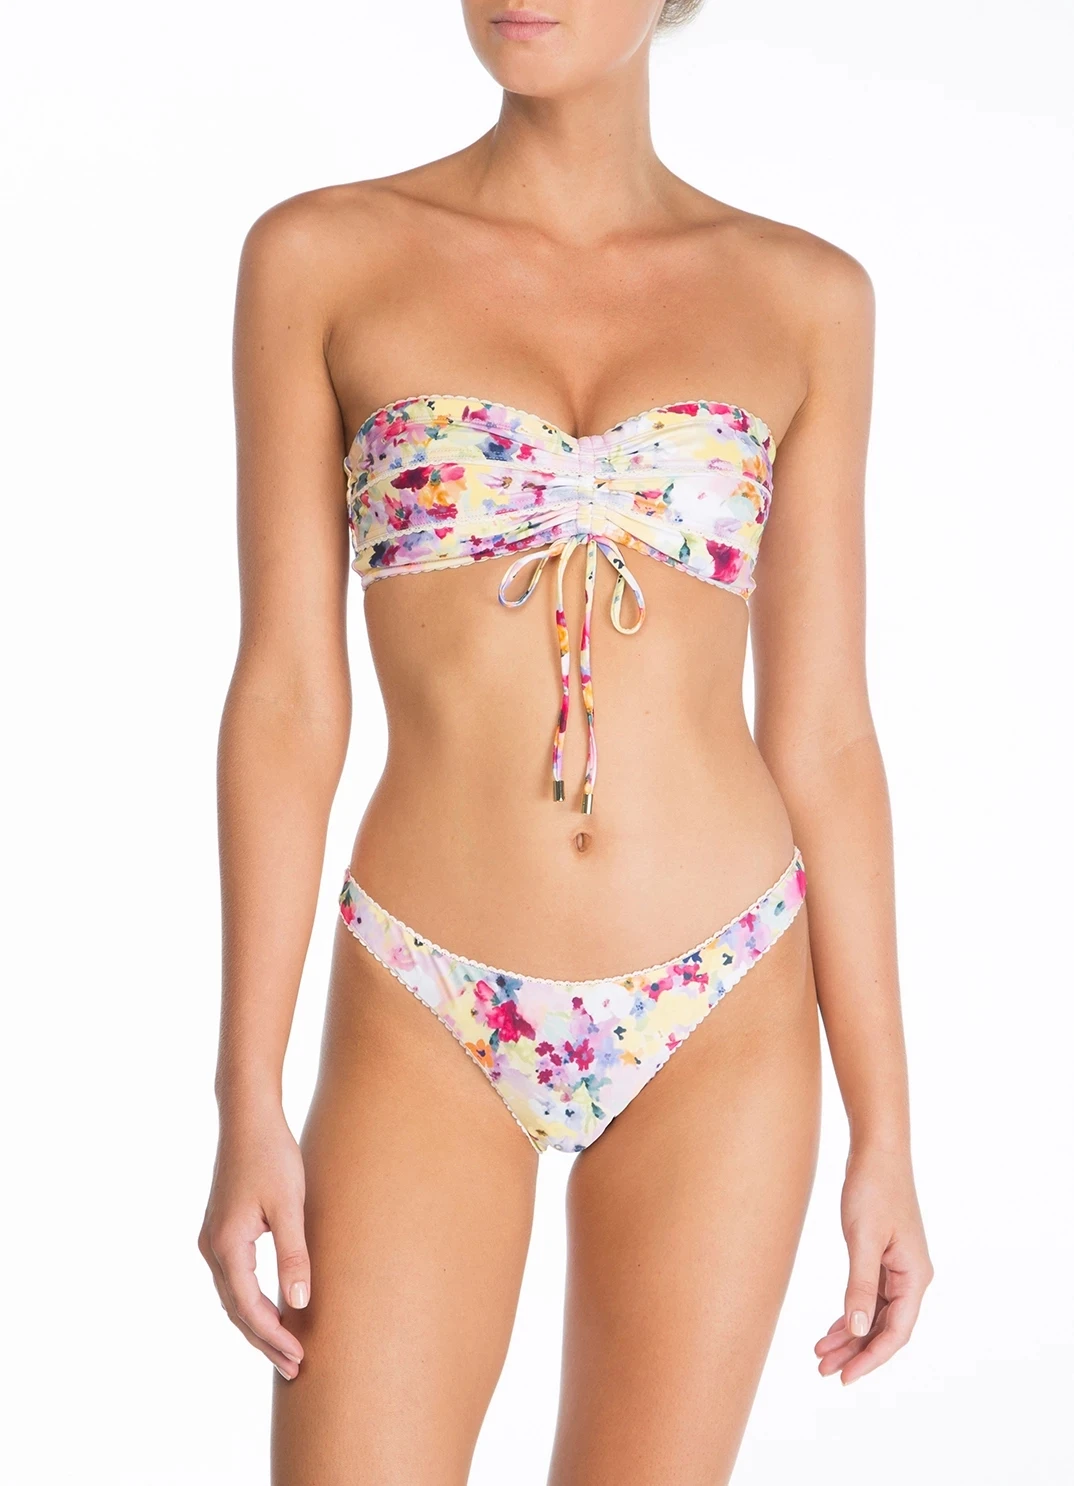 Strapless Women's Bikini Set Wrinkle Printed Top Low Waist Triangle Vintage Beach Swimwear Female Two Piece Swimsuit